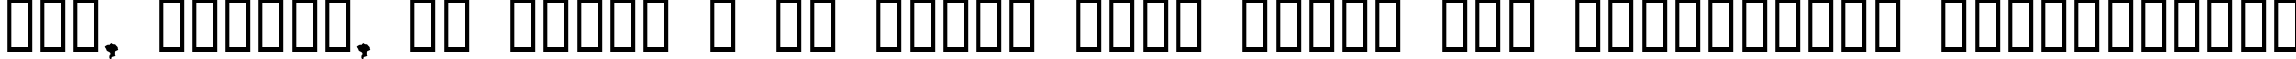 Пример написания шрифтом Old Oak текста на украинском